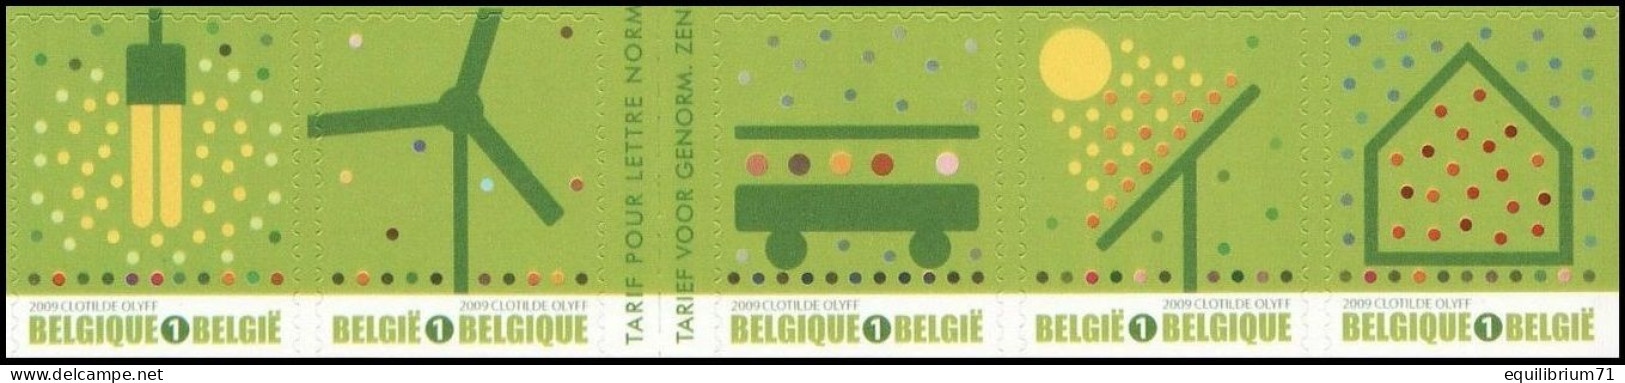 B104/C104**(3911-14 + 3915a) - Timbres Verts/Groene Zegels/Grüne Briefmarken - 1/2 Carnet/1/2 Boekje - BELGIQUE / BELGIË - Ungebraucht